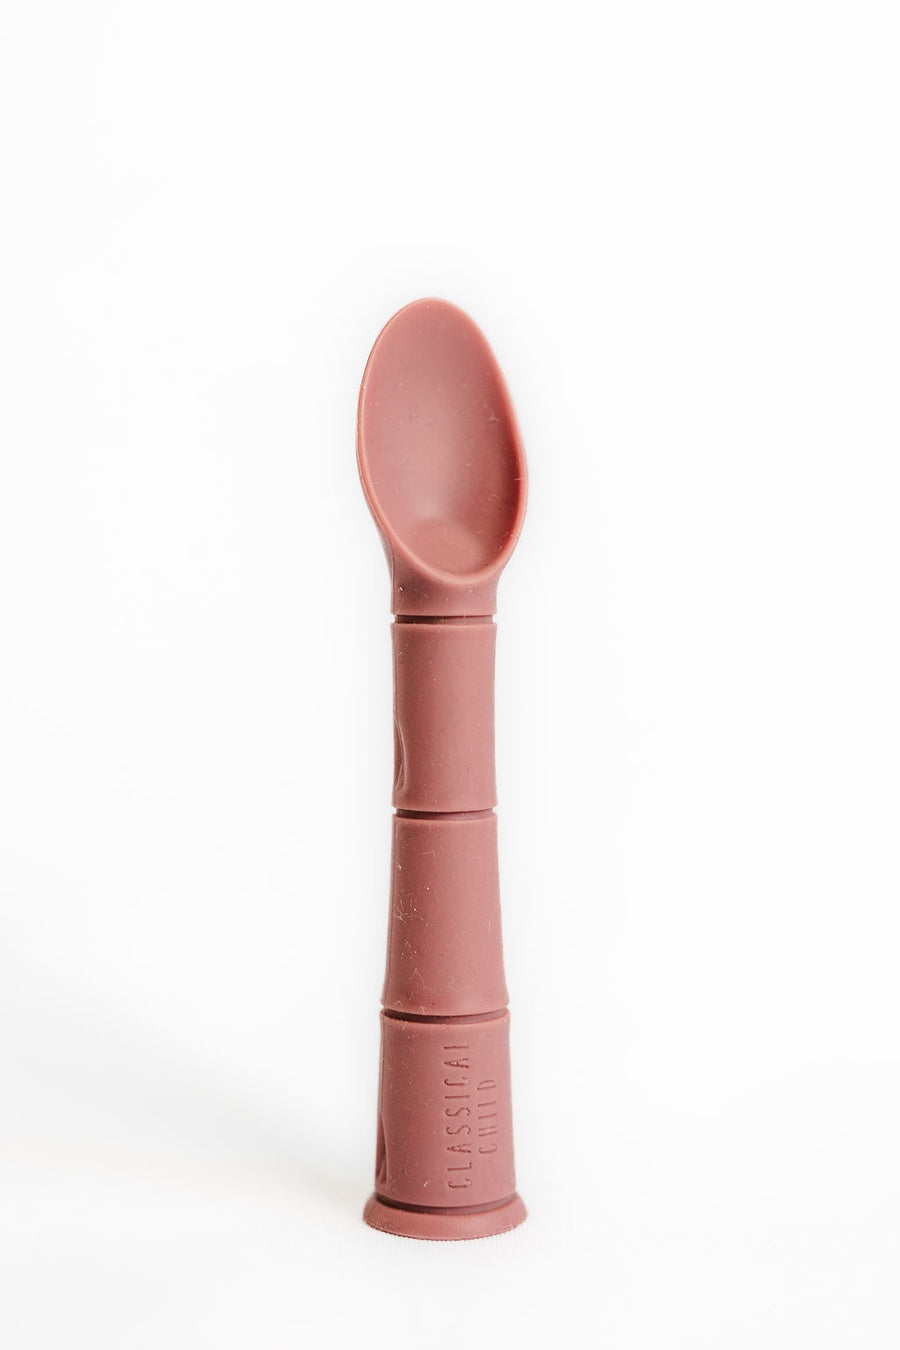 Desert Rose Silicone Beginner Baby Spoon 2 Pack